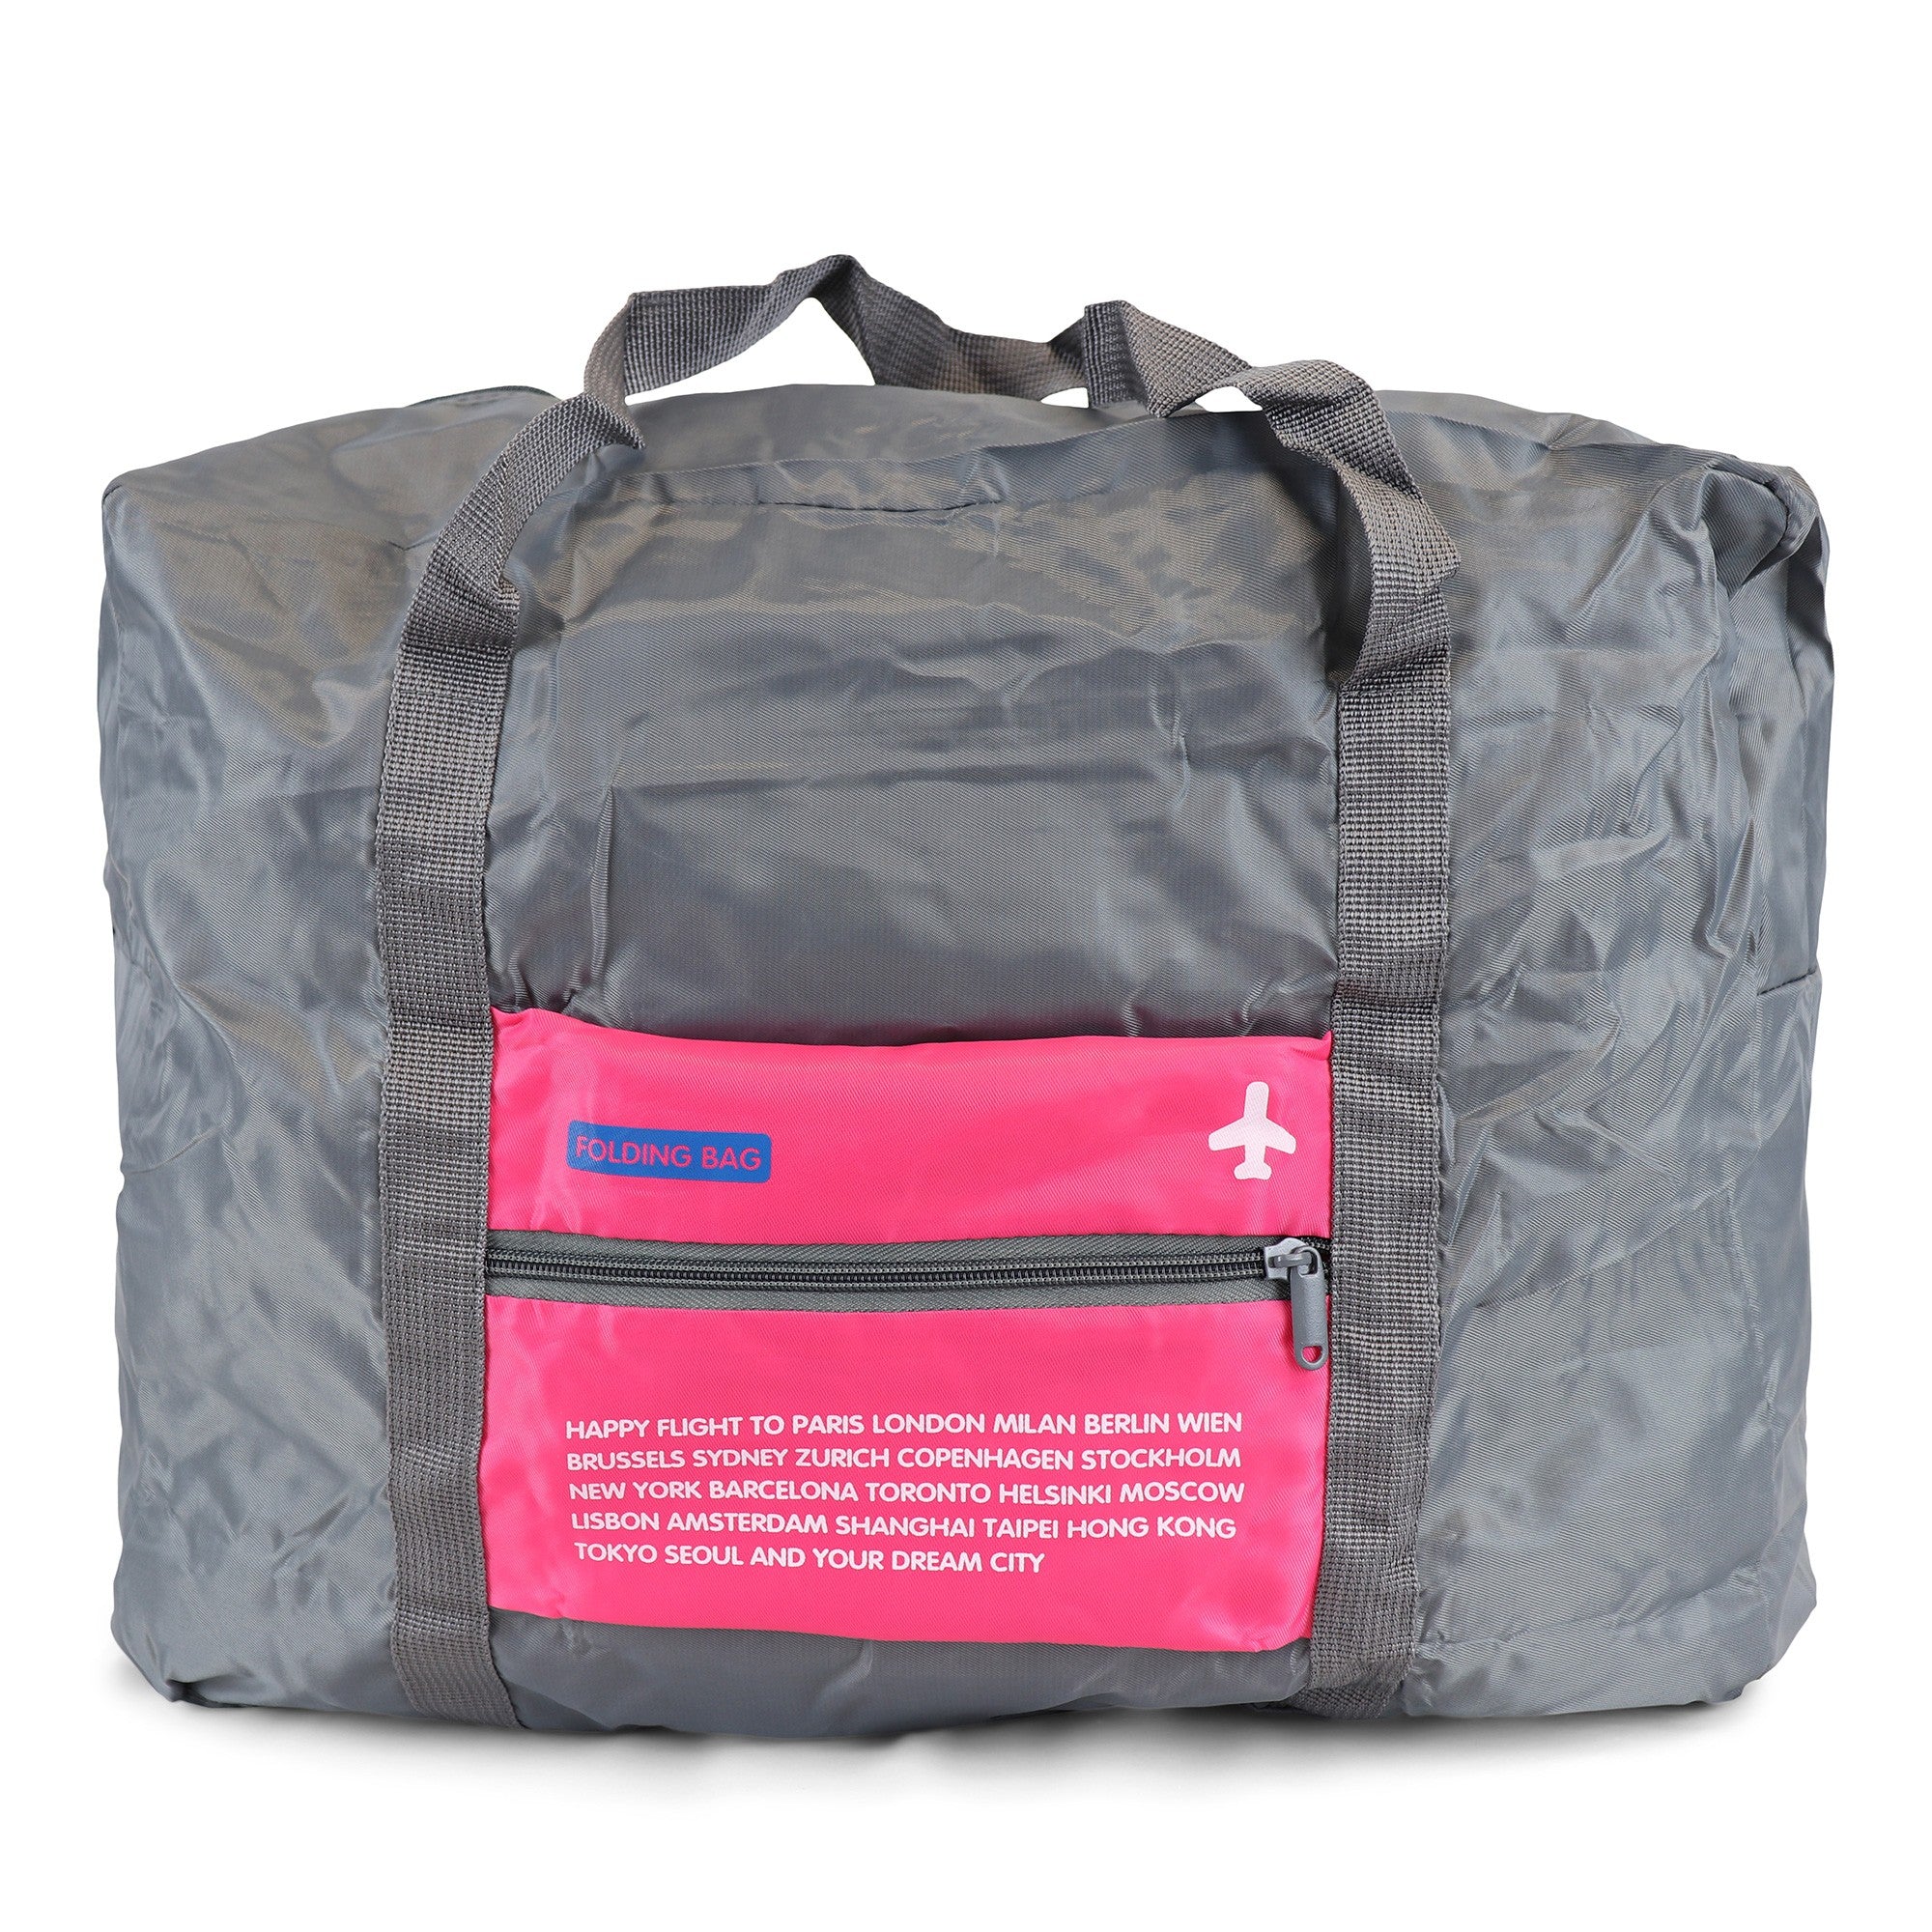 17" Lightweight Foldable Wholesale Tote Bags in Fuschia - Bulk Case of 24 - 4402-FUSCHIA-24